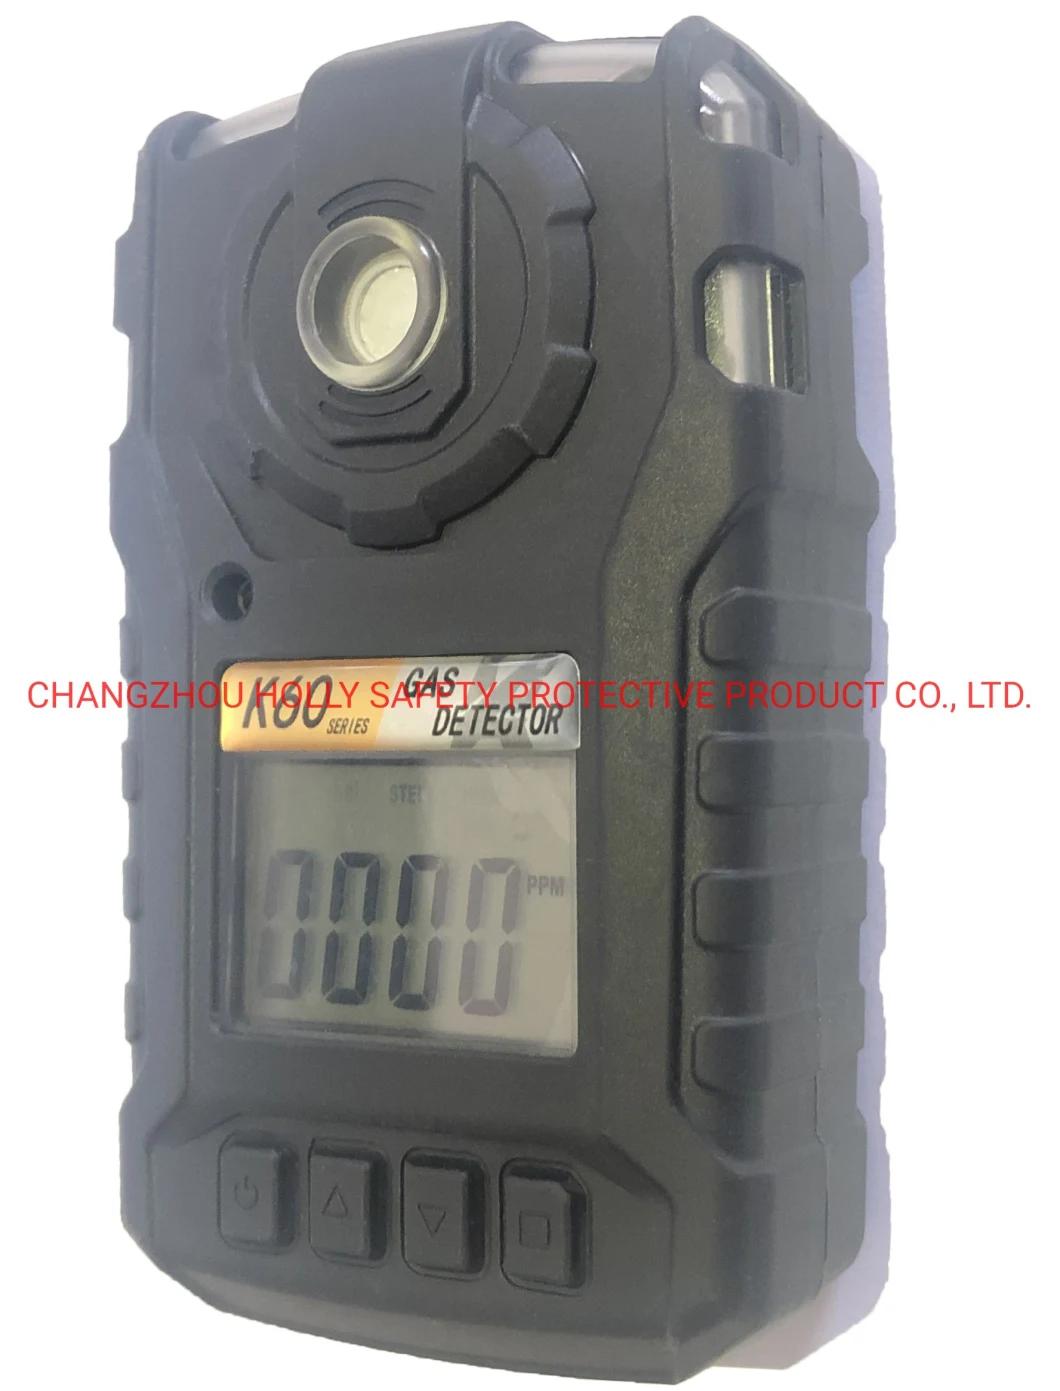 Portable Single Gas Nh3 Detector/Analyzer